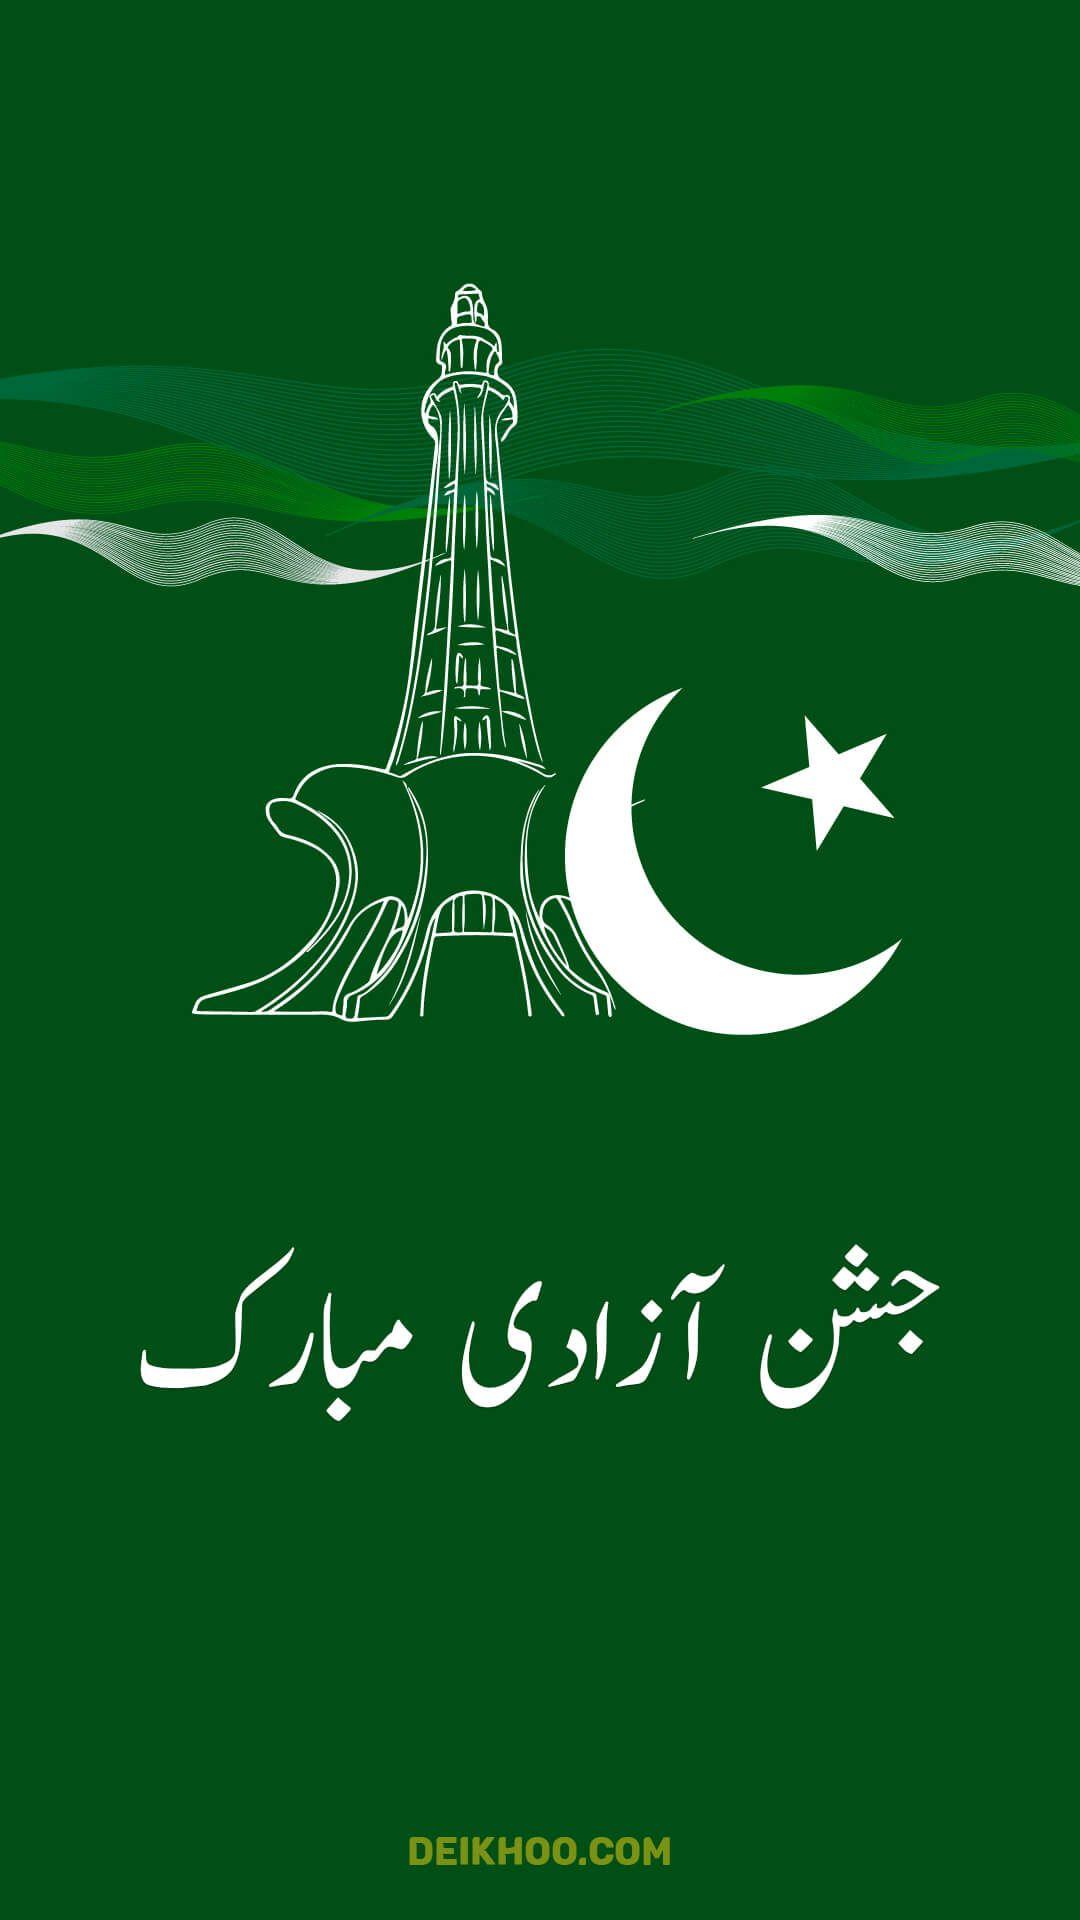 Pakistan 14 August Independence day wallpaper. Deikhoo The Words Speak